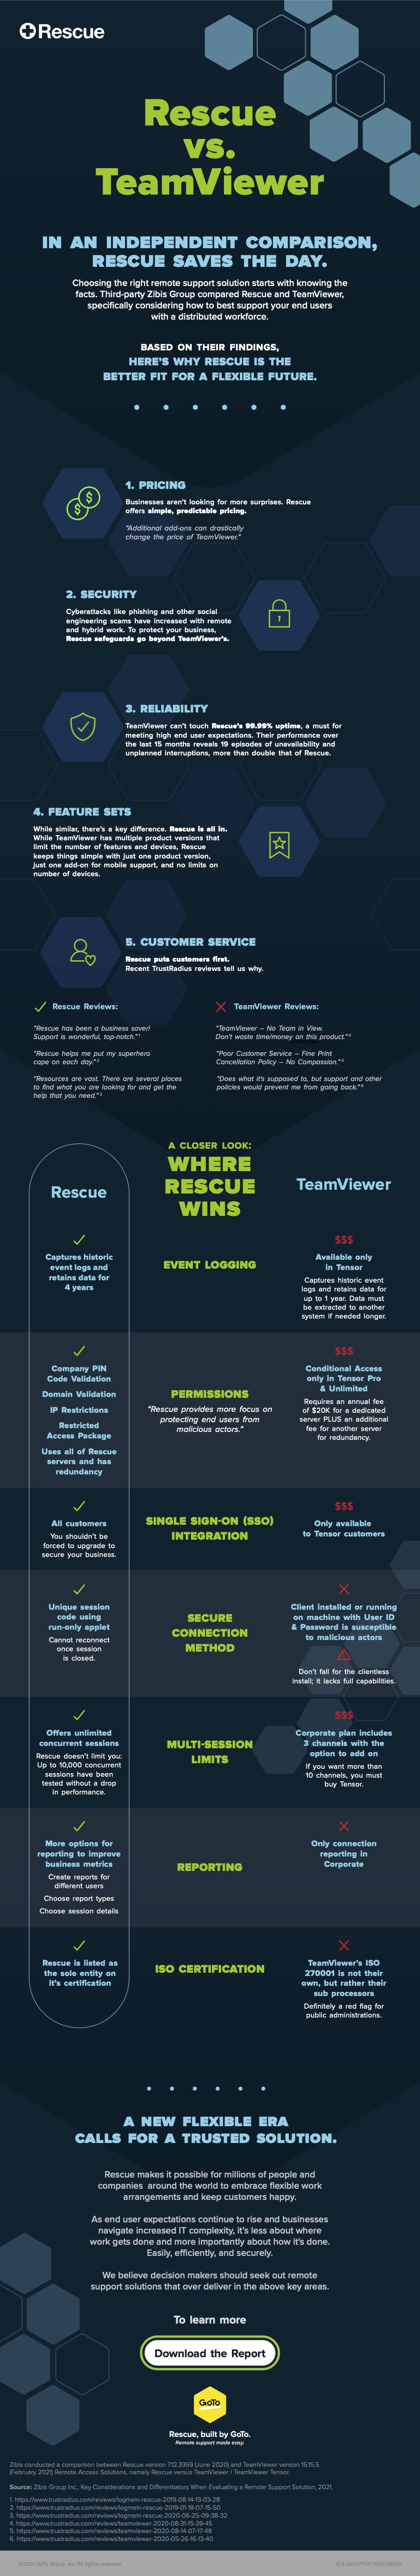 LogMeIn Rescue vs TeamViewer EN